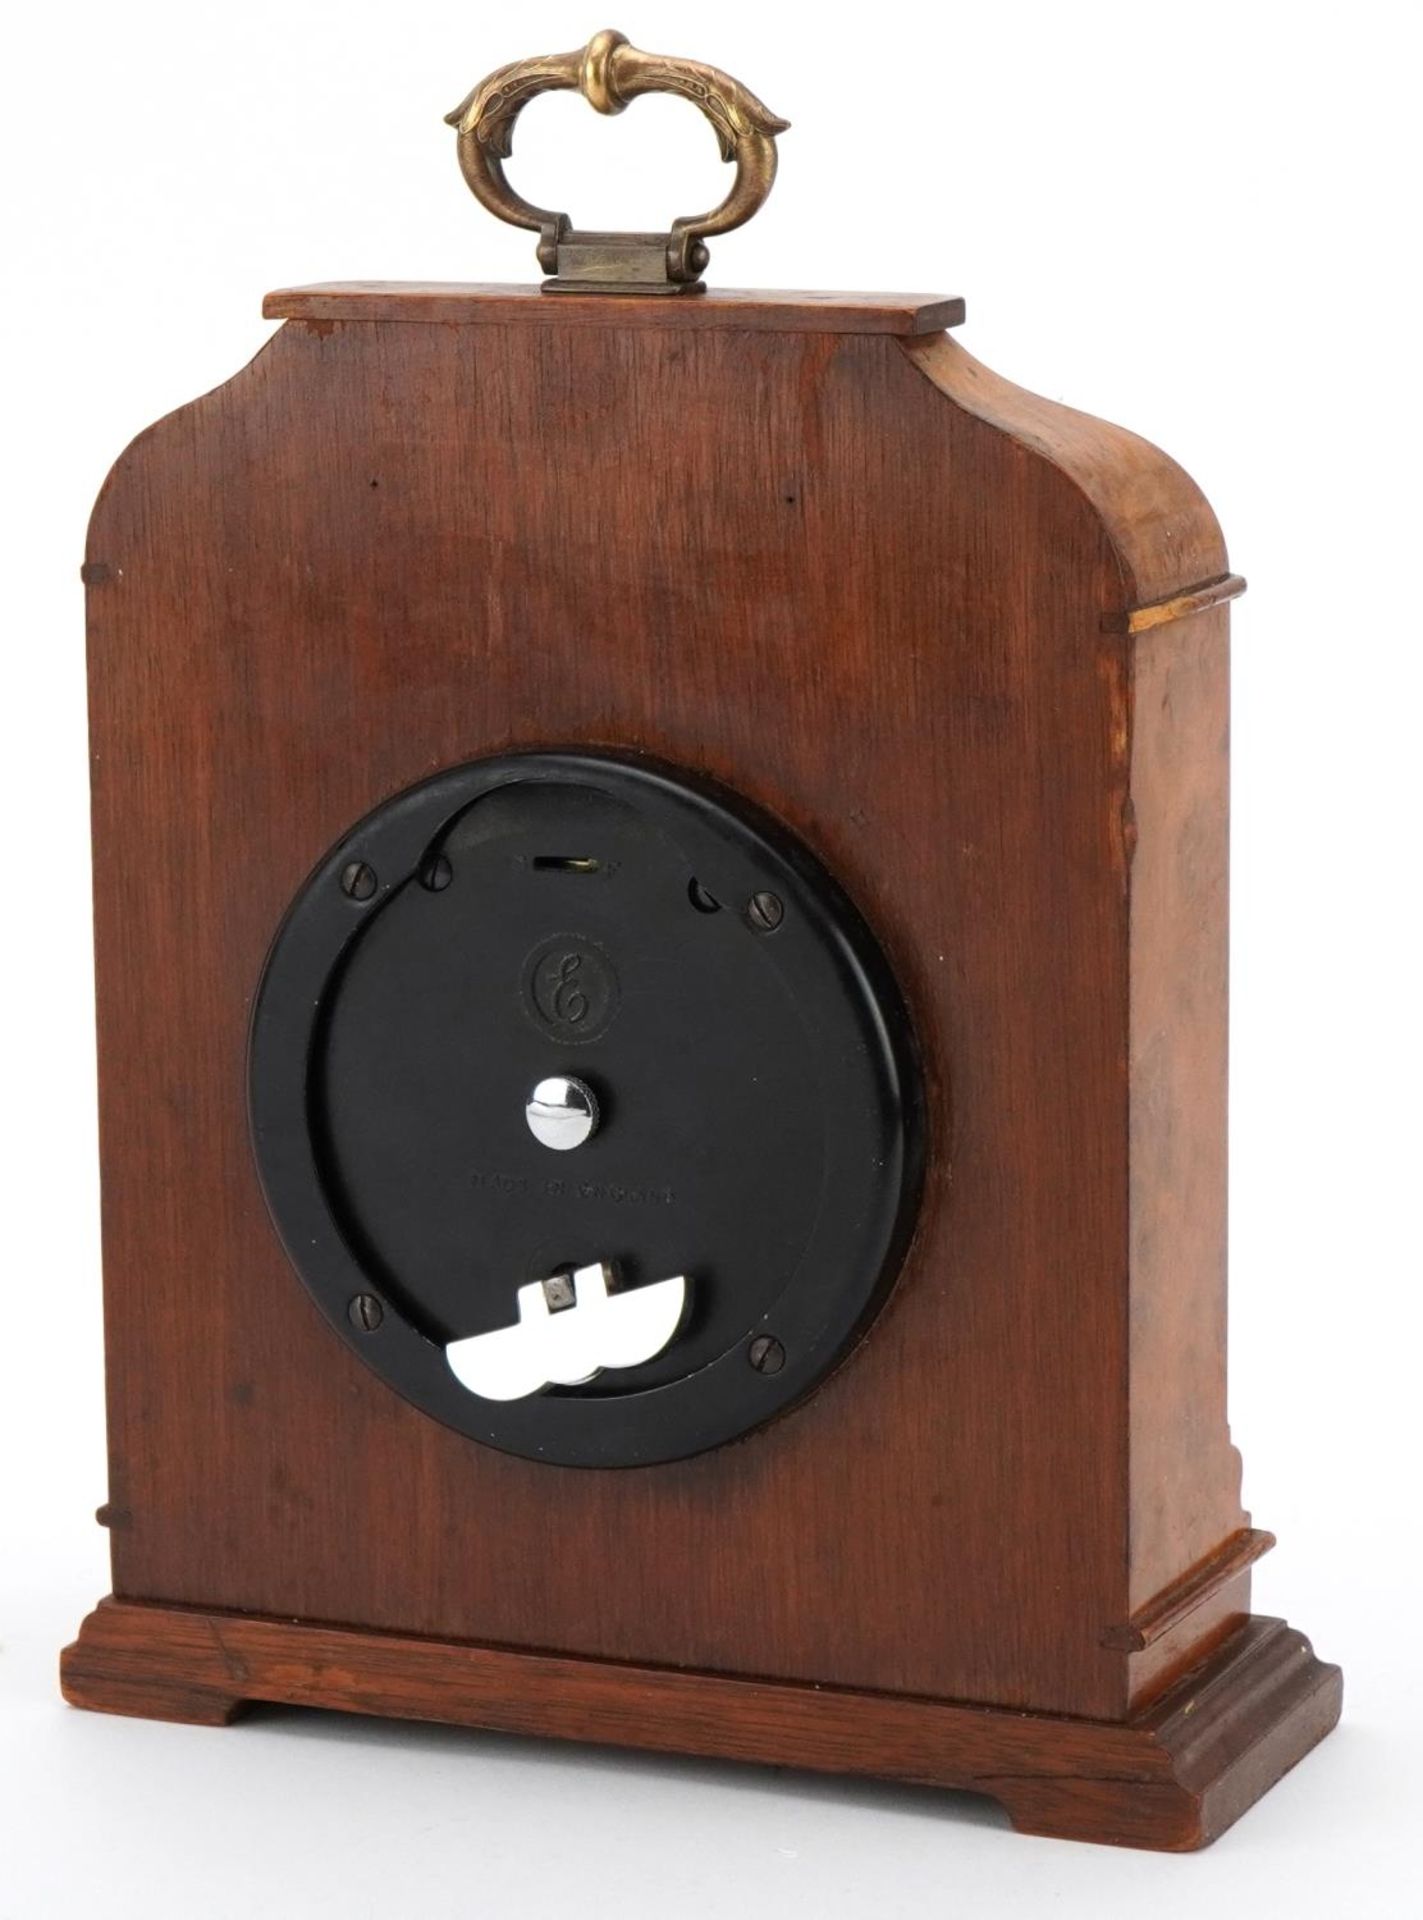 Burr walnut Elliott mantle clock, retailed by Shorland Fooks Brighton, 24cm high - Image 2 of 3